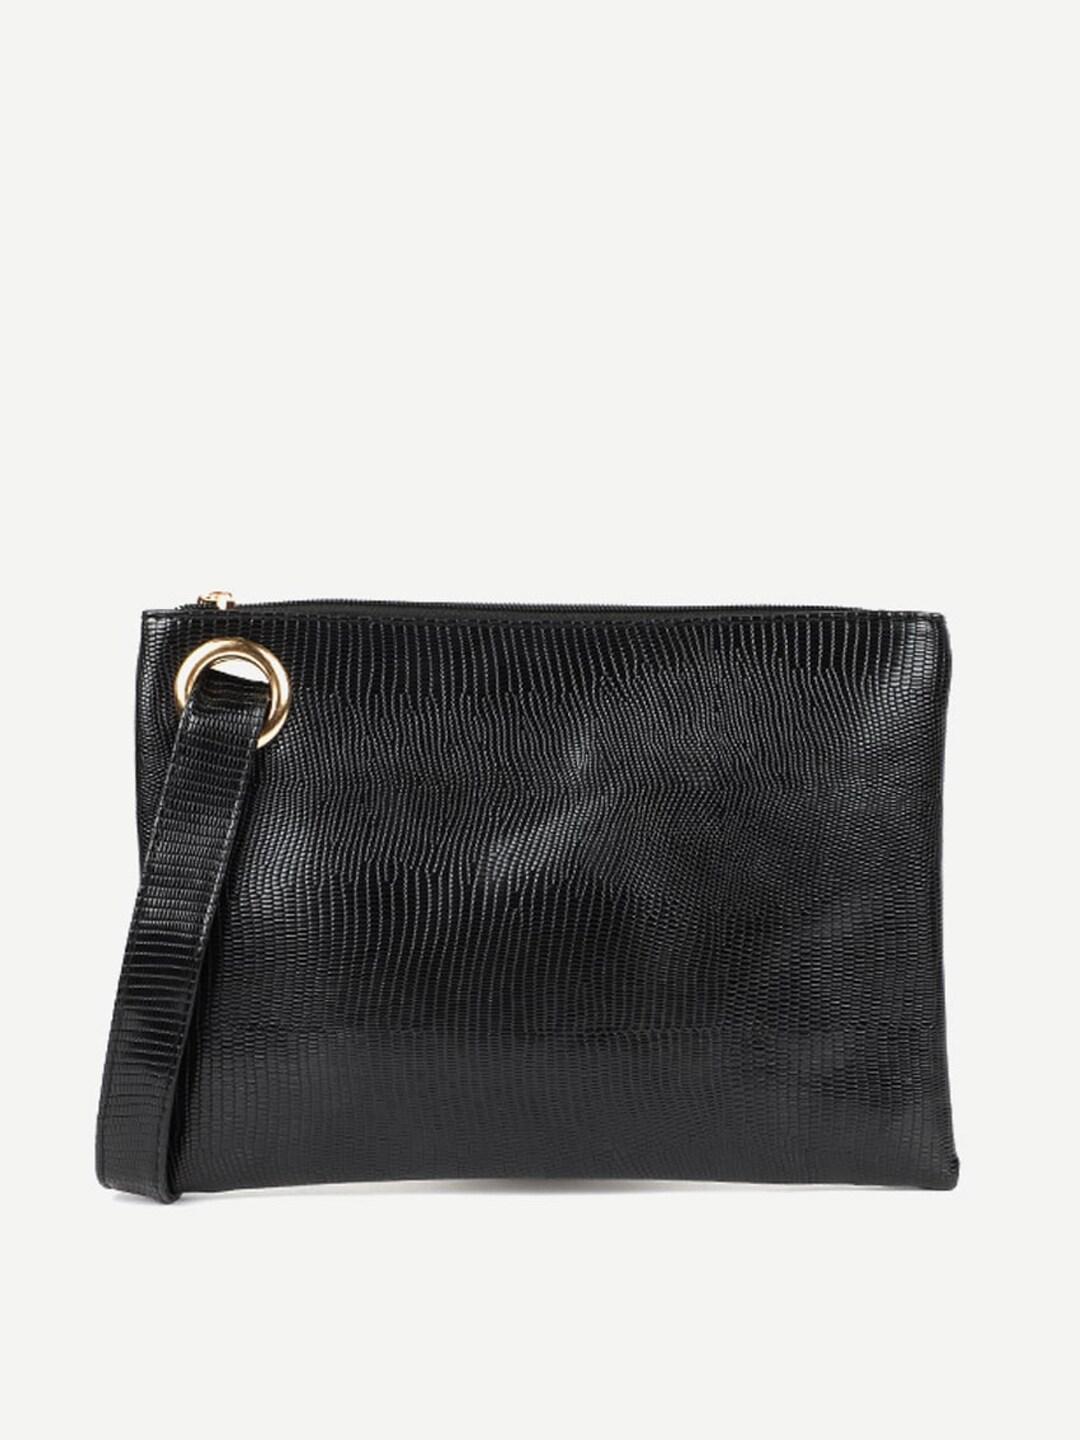 Carlton London Black Structured Sling Bag